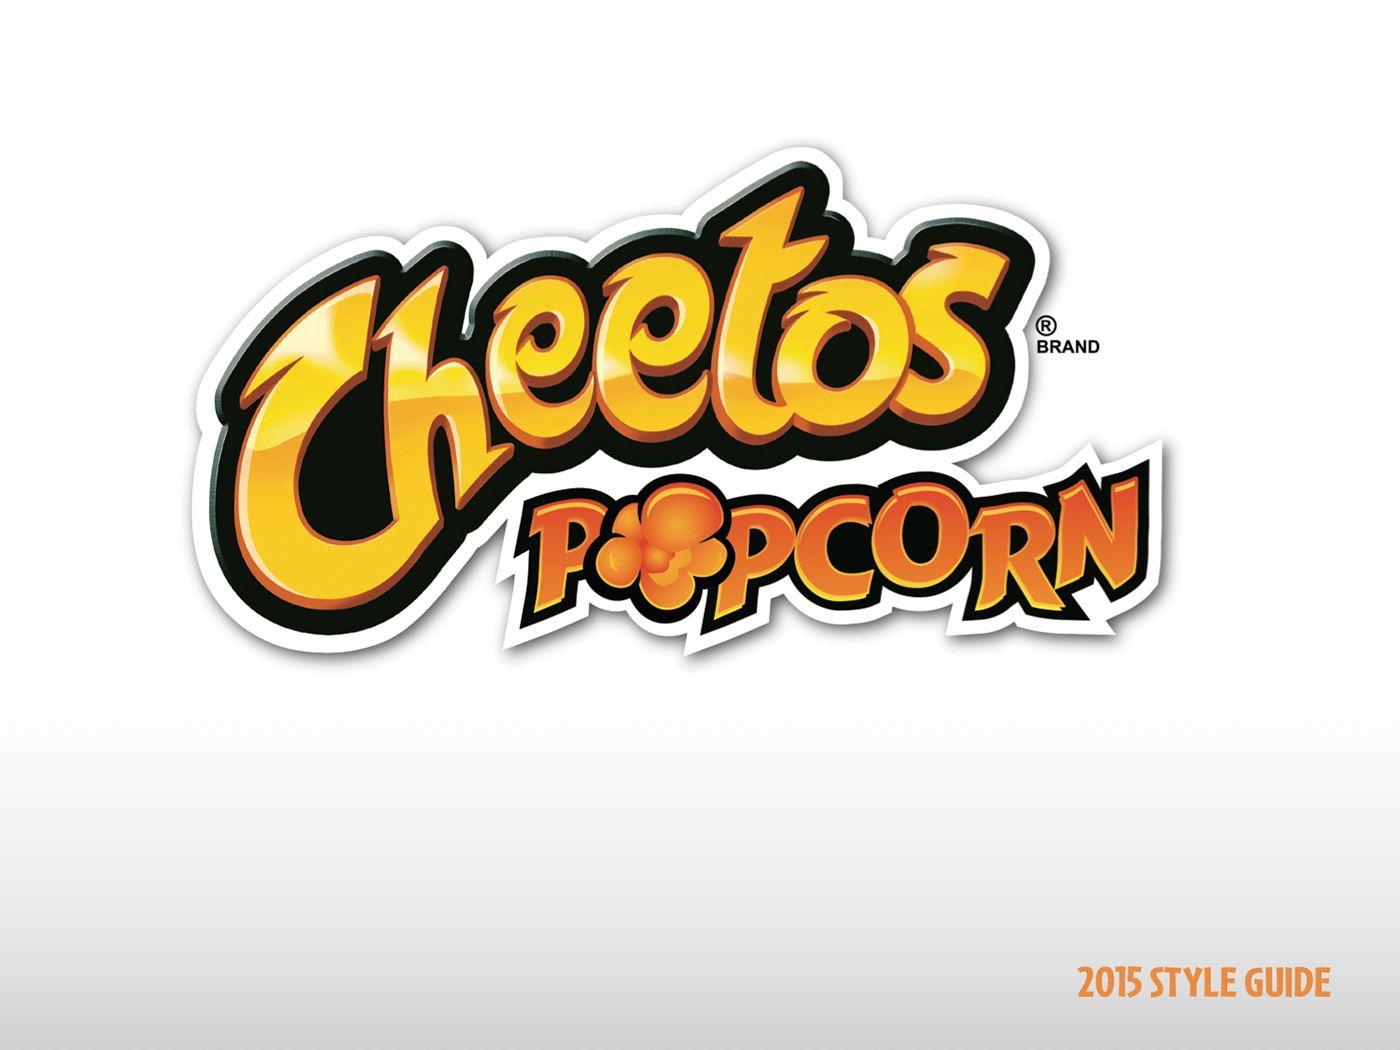 Cheetoes Logo - CHEETOS POPCORN LOGO & STYLE GUIDE on Behance